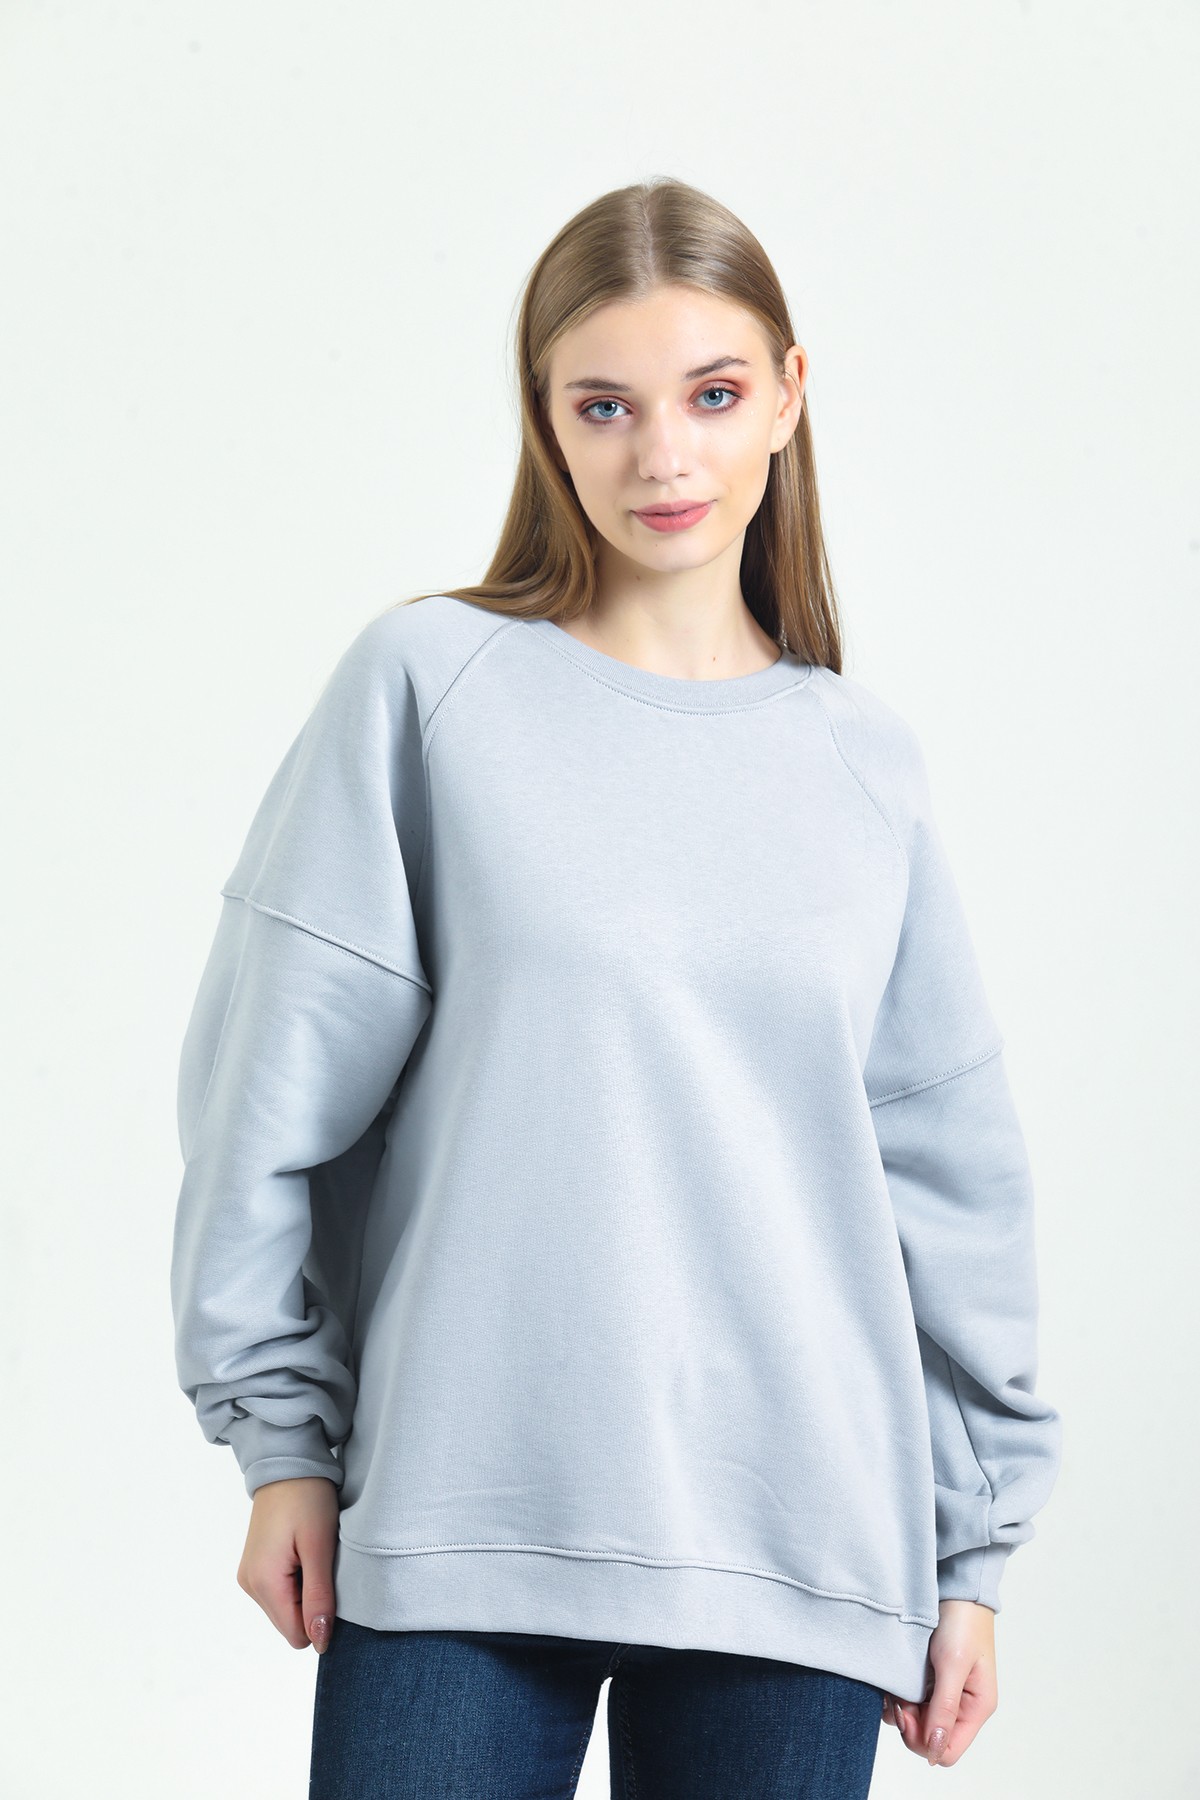 Kadın Oversized Sweatshirt Mavi %100Pamuk